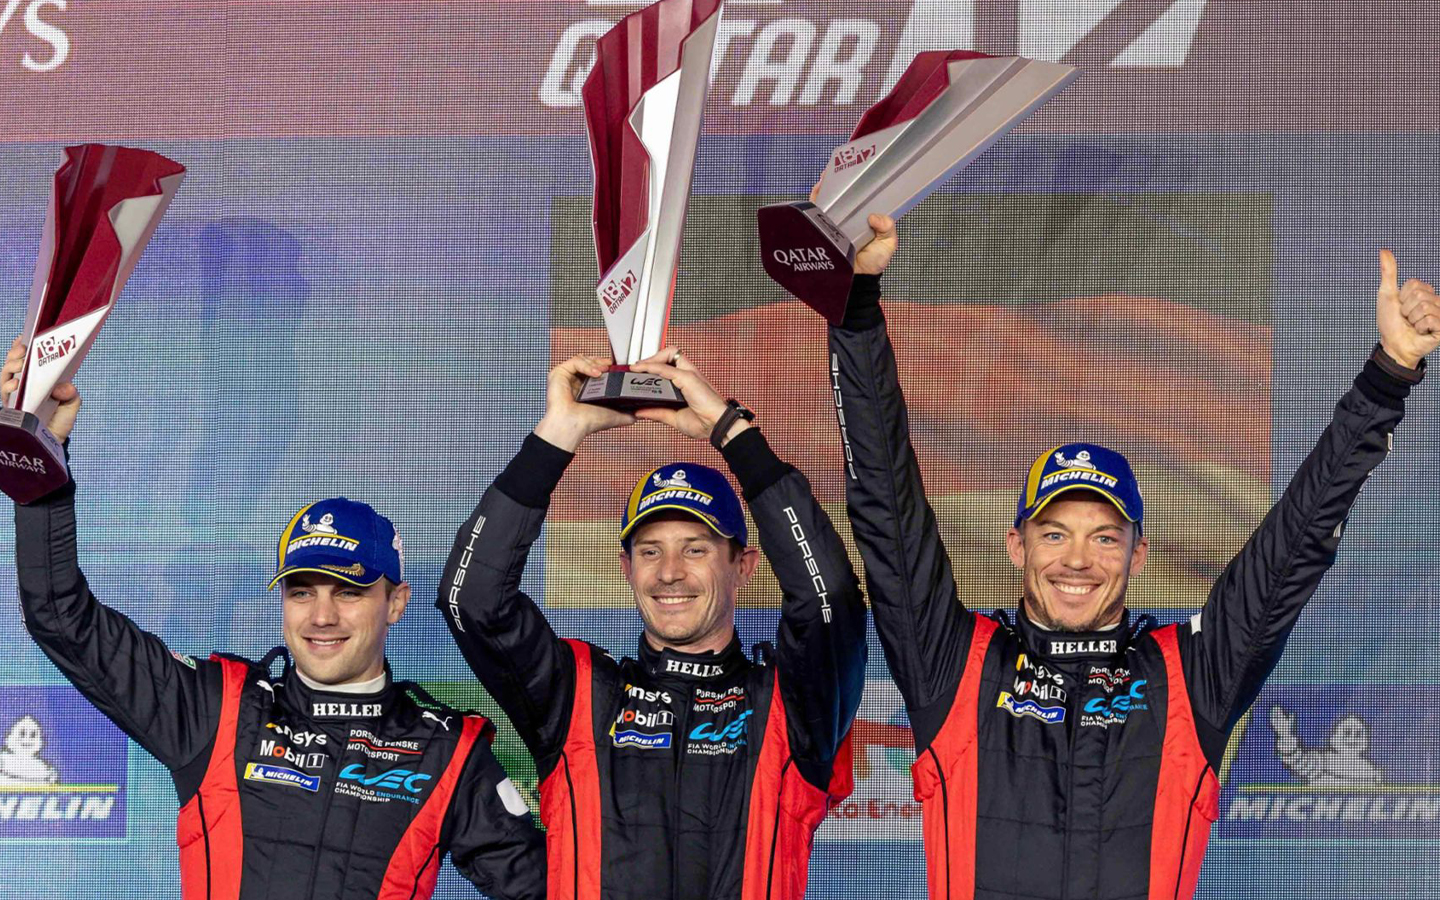 Three Porsche motor racing drivers wave trophies on podium